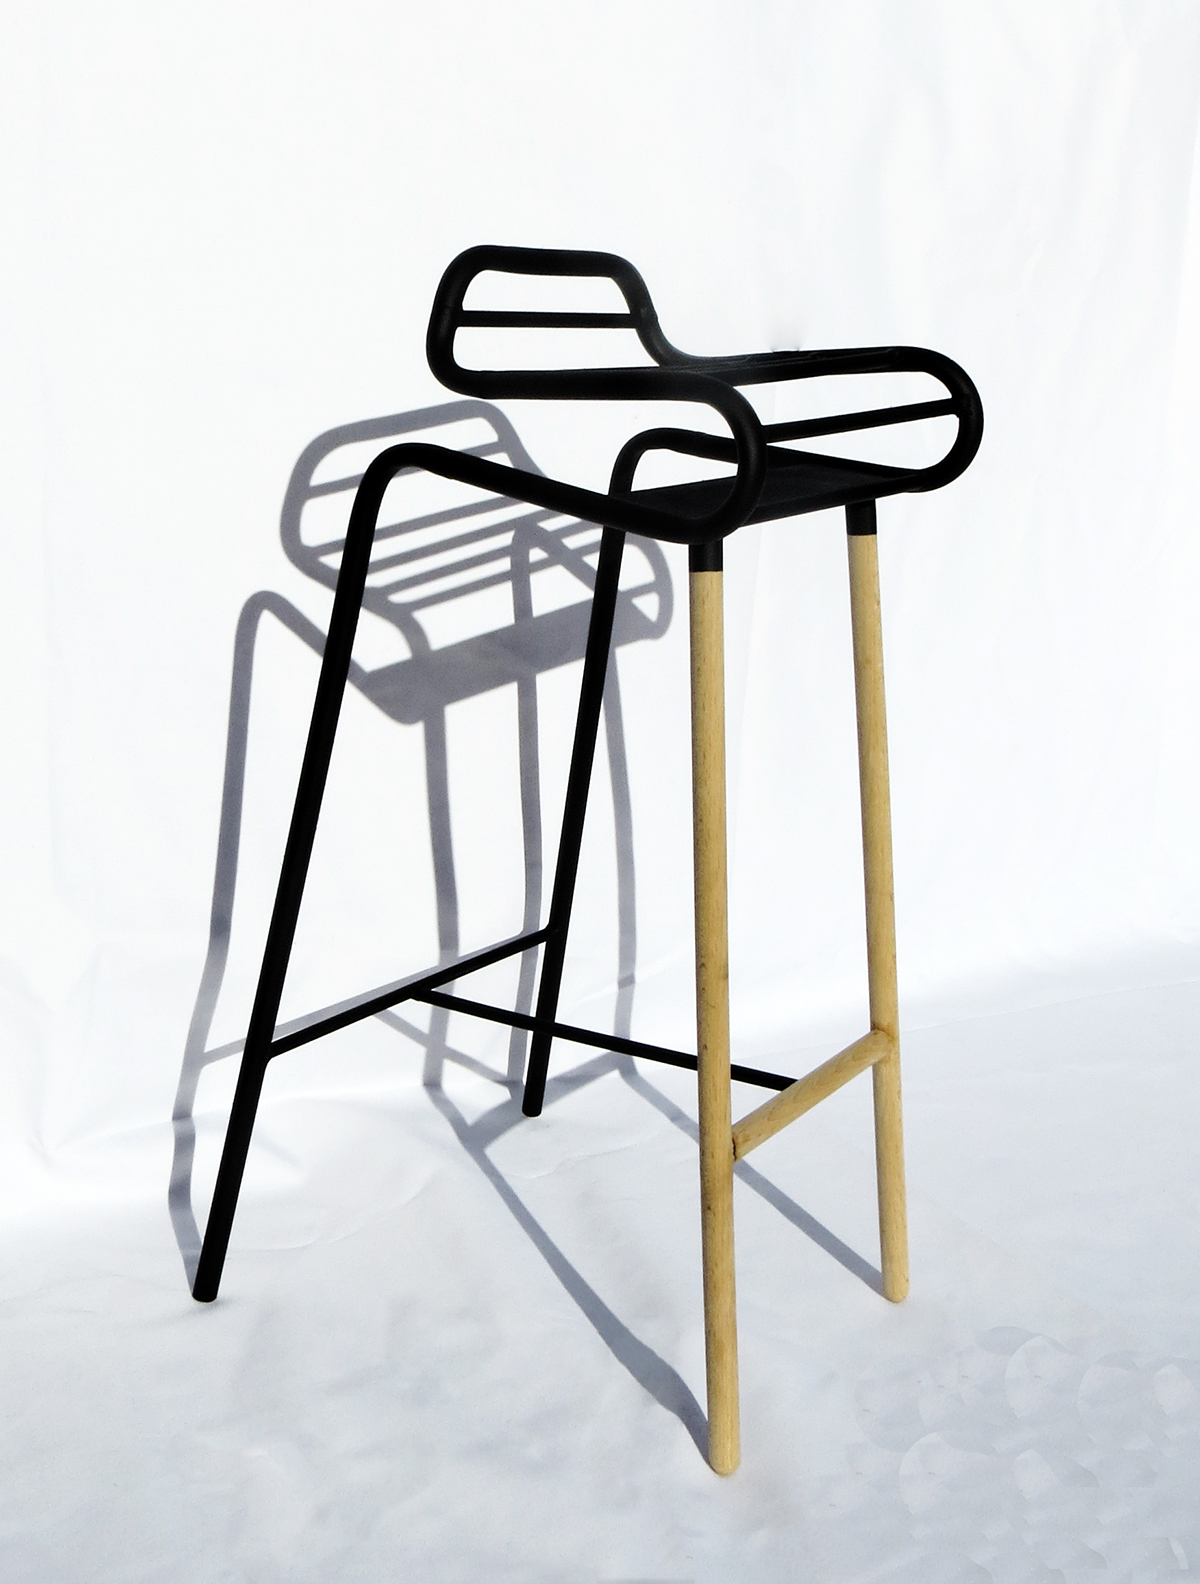 INA design chair stool chair elisava luxury